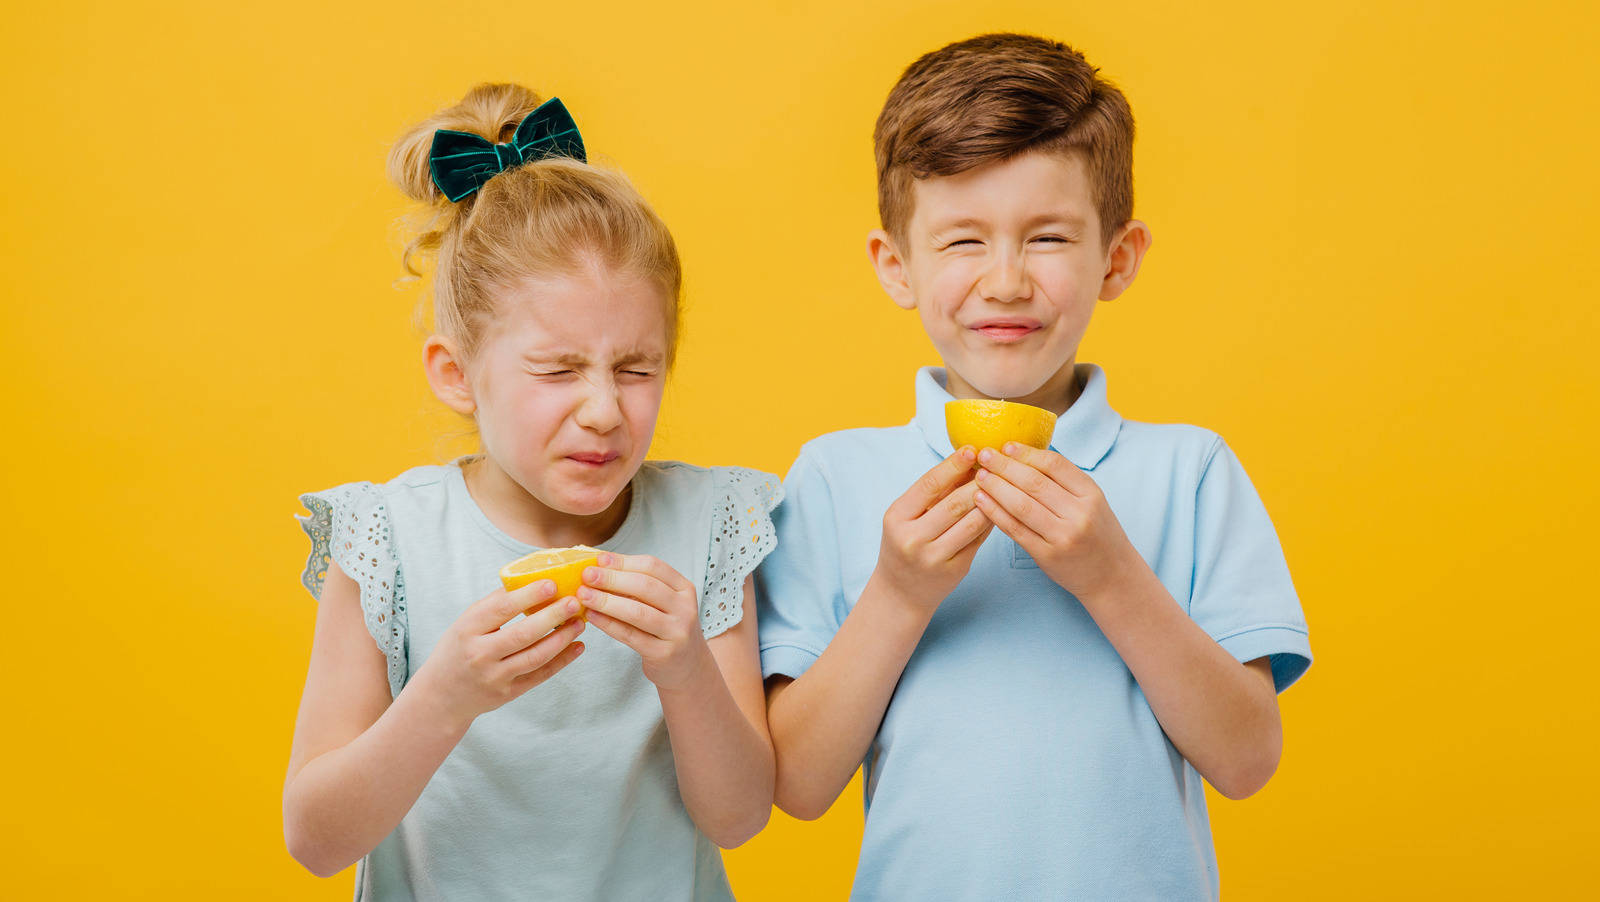 Lustigekinder, Die Saure Zitronen Essen Wallpaper